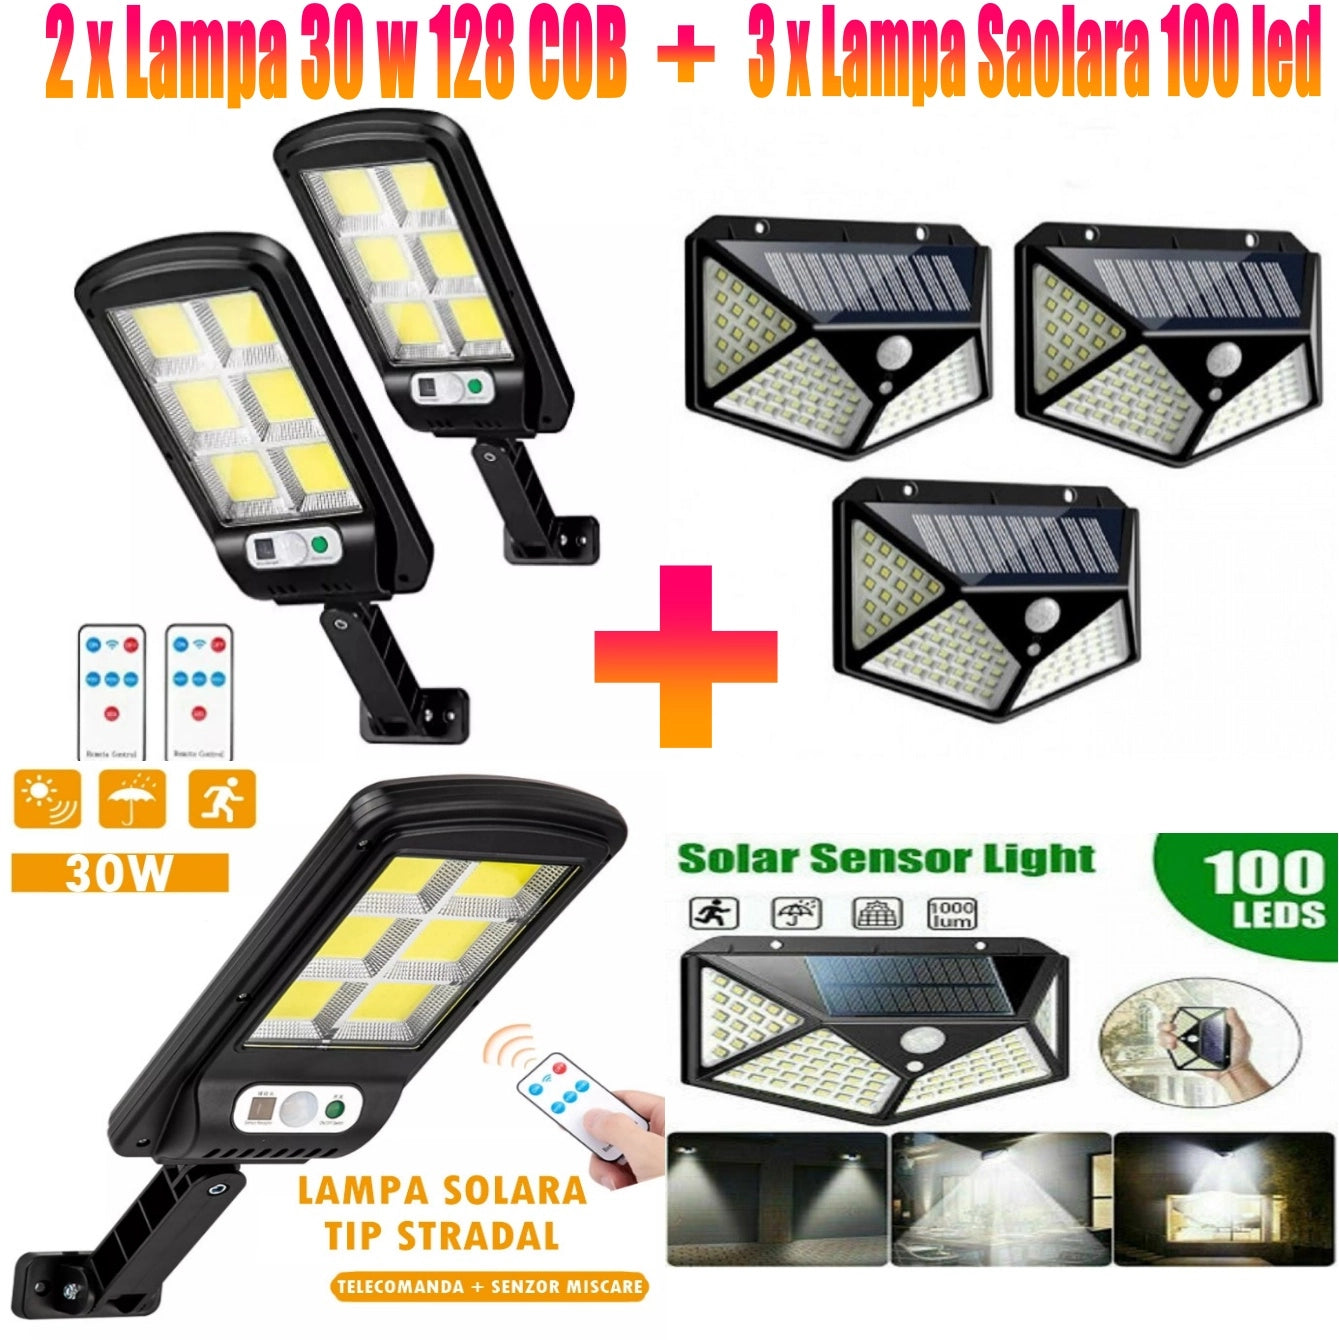 SET 2 X Lampa Solara cu LED, 30W, 128 COB + SET 3 x Lampa Solara 100 LED